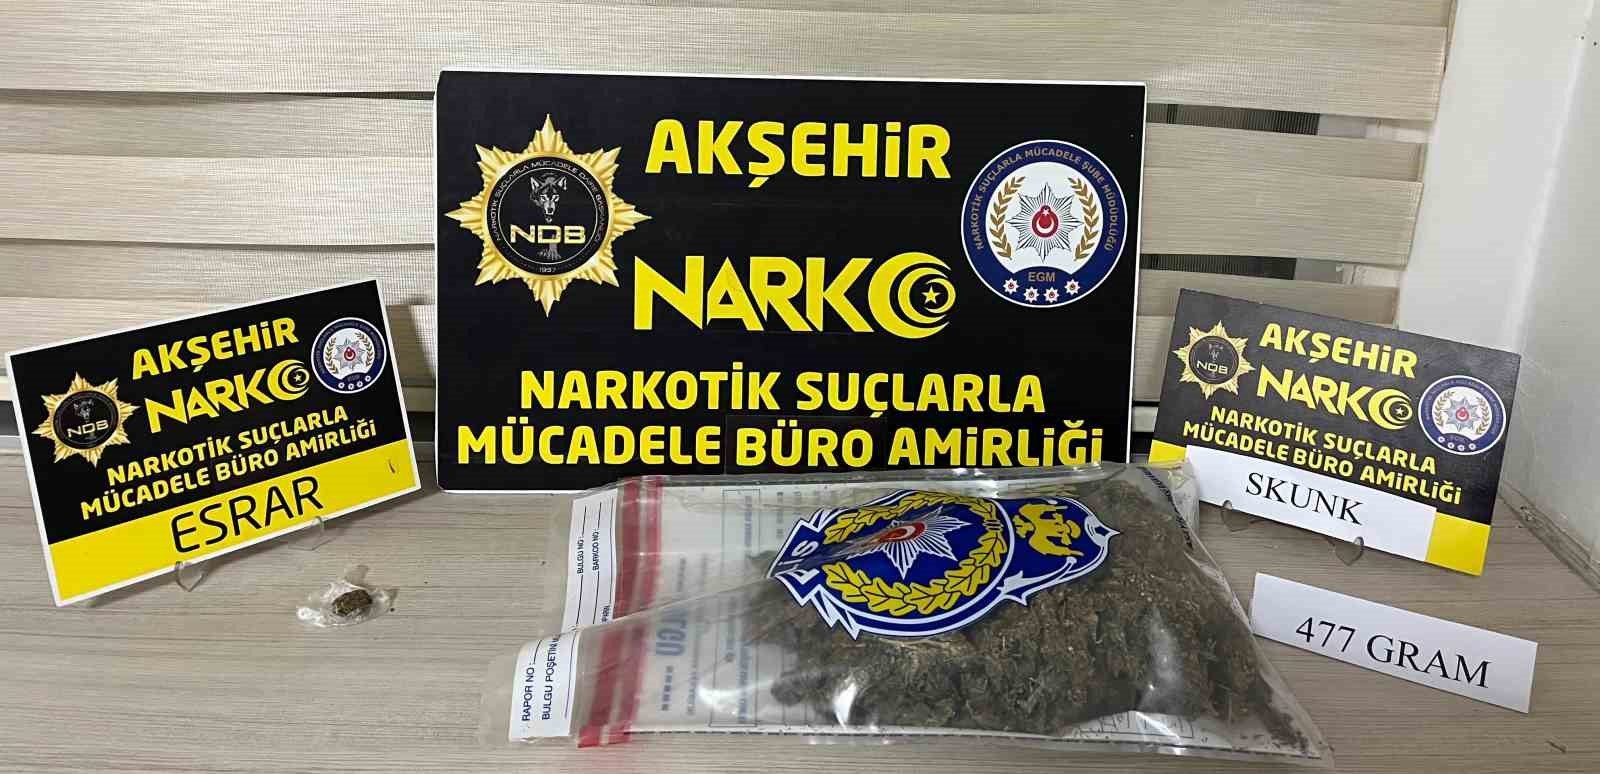 Konya’da uyuşturucu operasyonu: 2 tutuklama